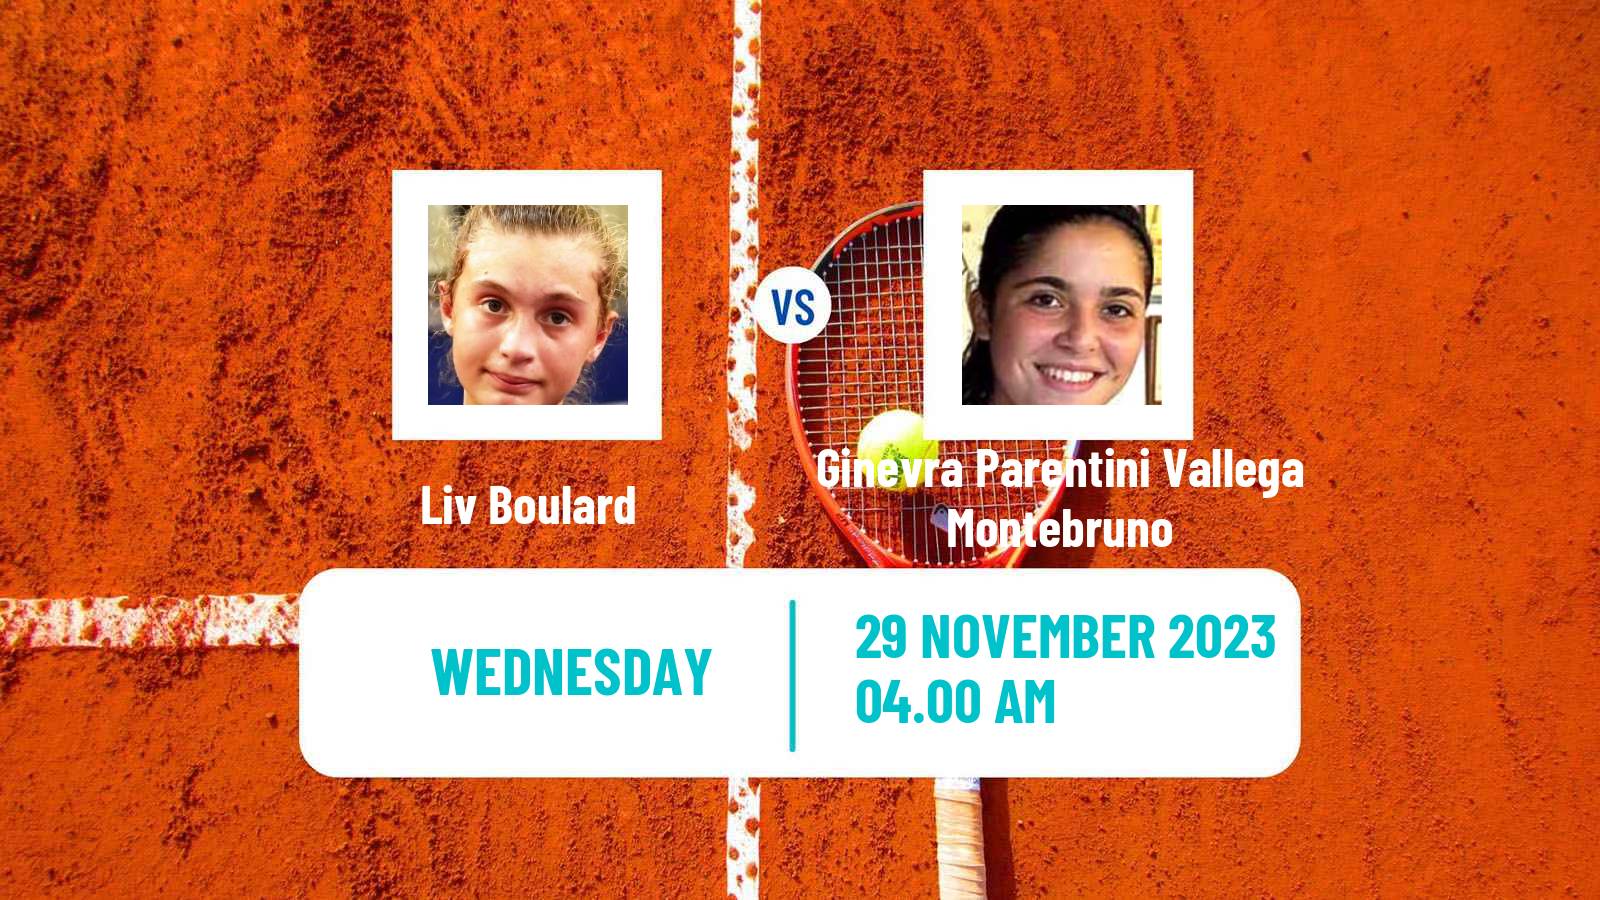 Tennis ITF W15 Heraklion 5 Women Liv Boulard - Ginevra Parentini Vallega Montebruno